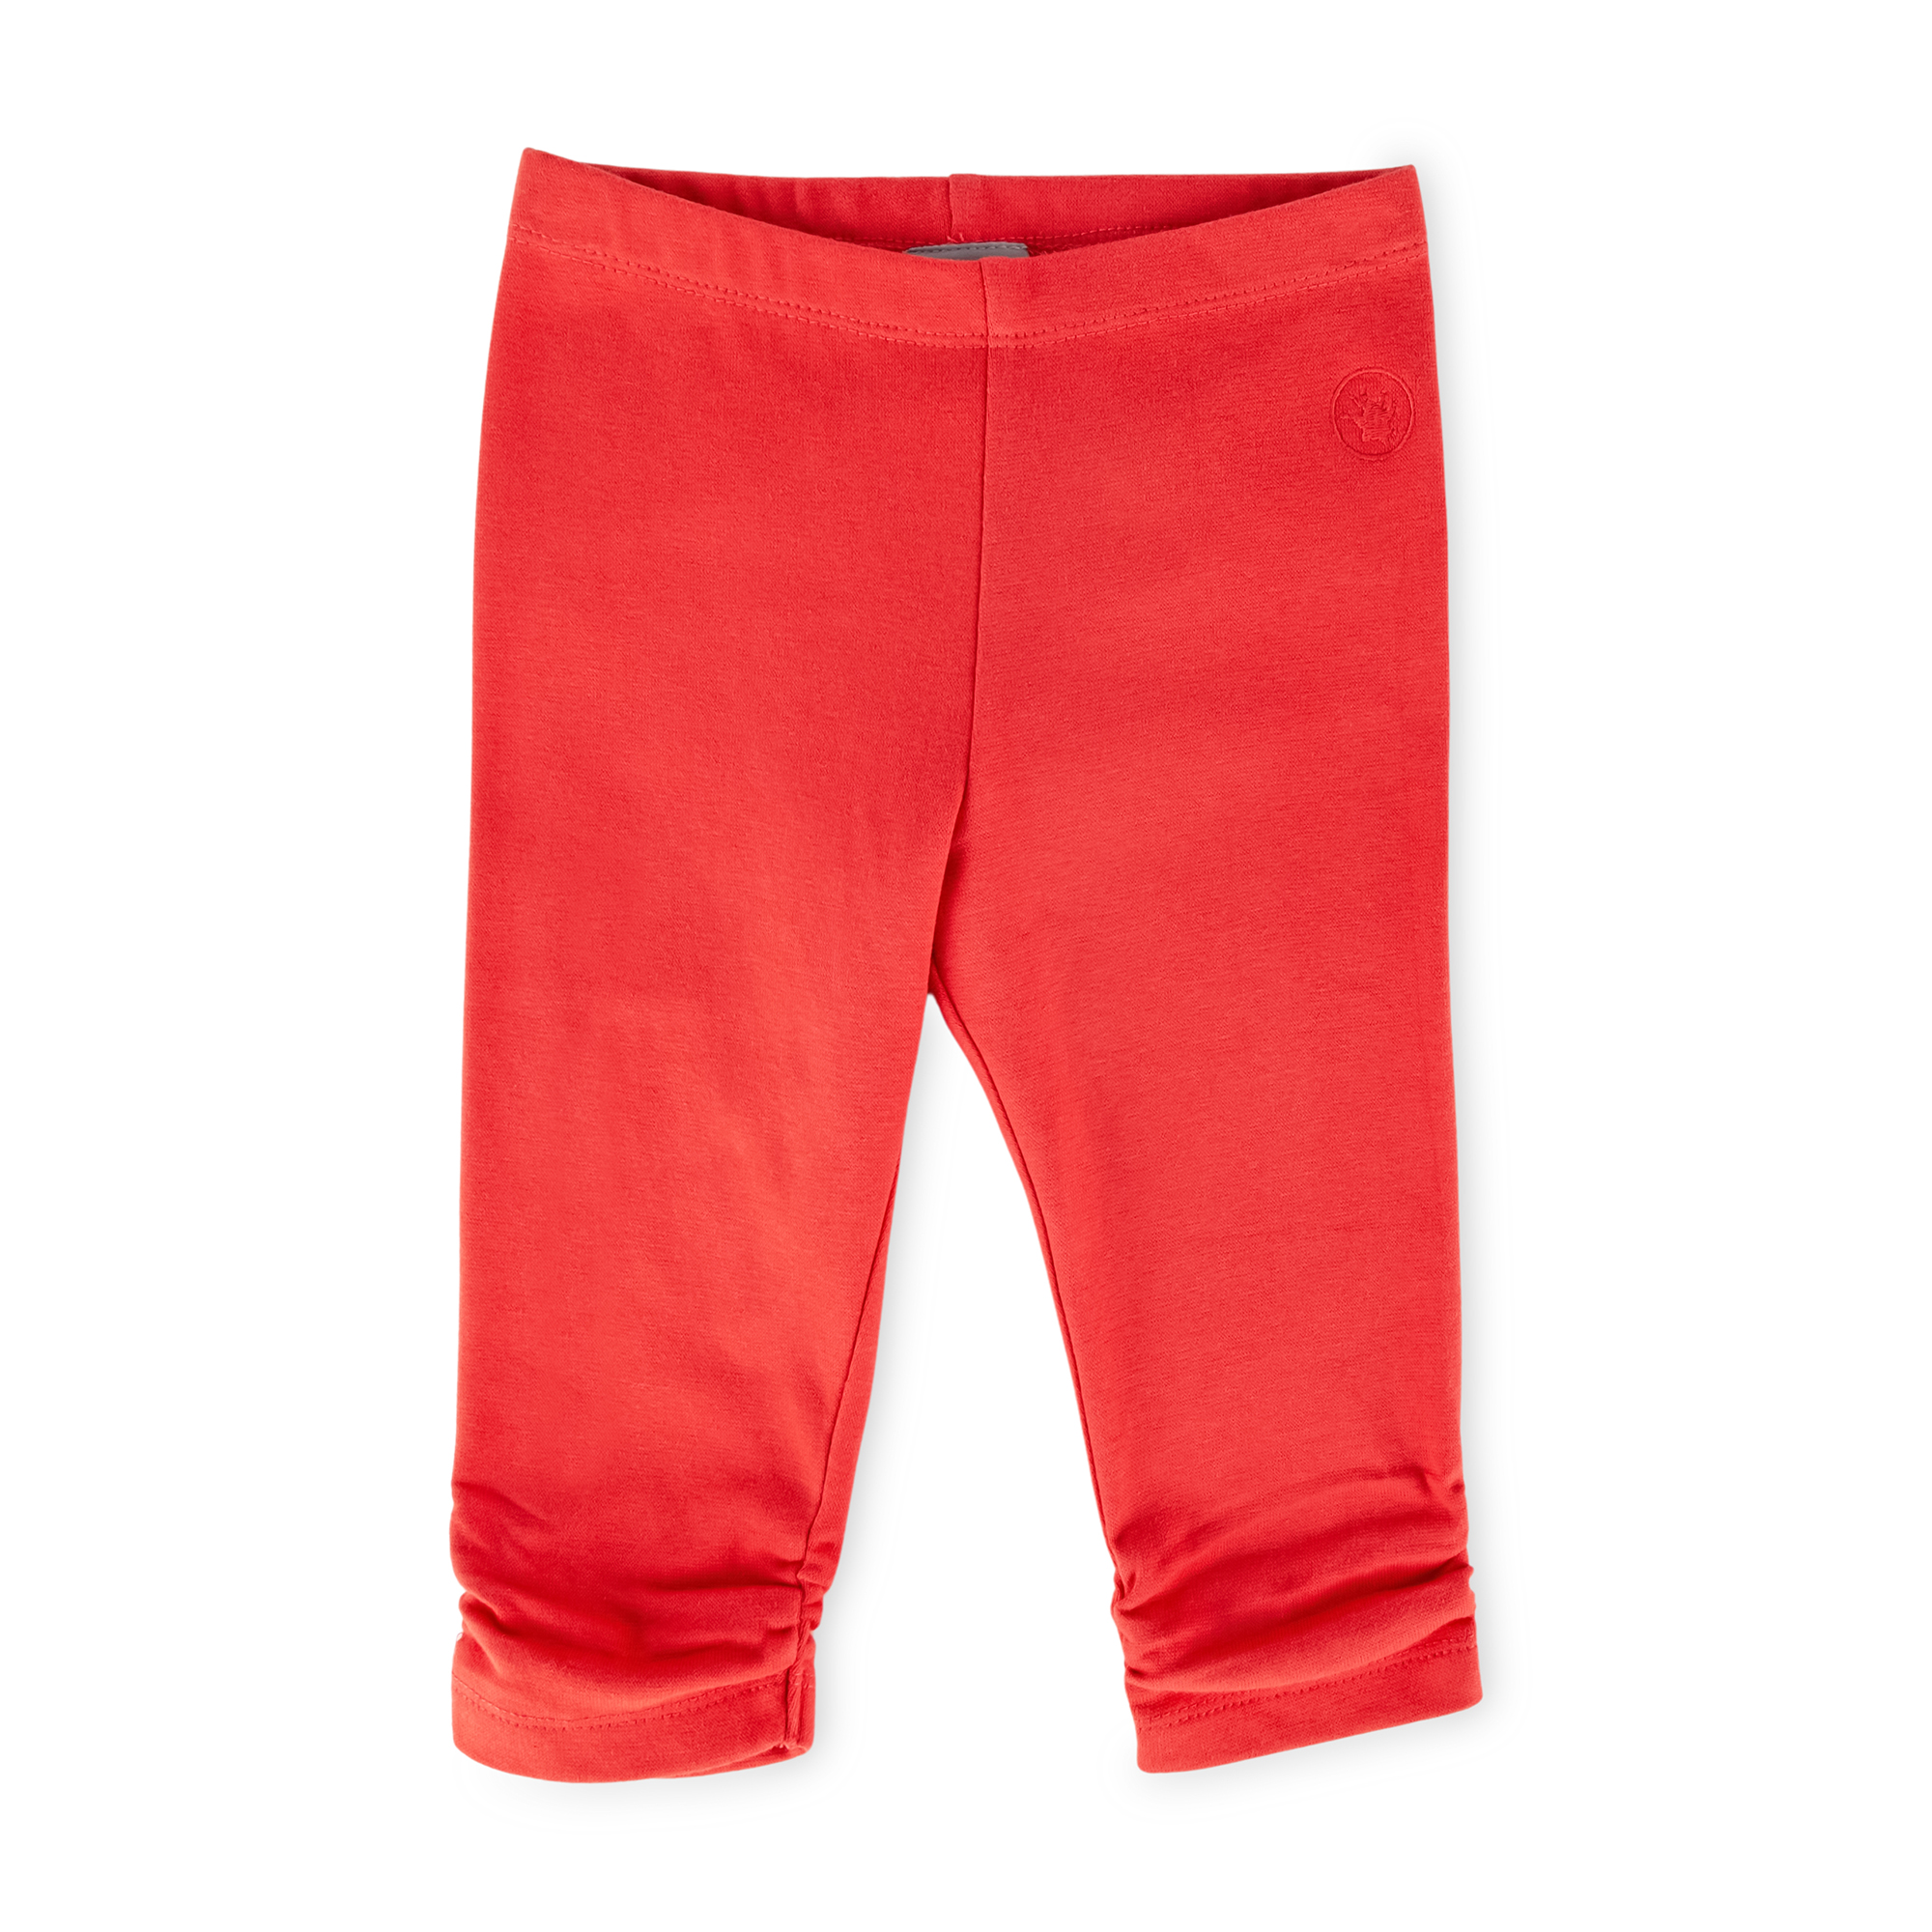 Children's capri leggings coral red